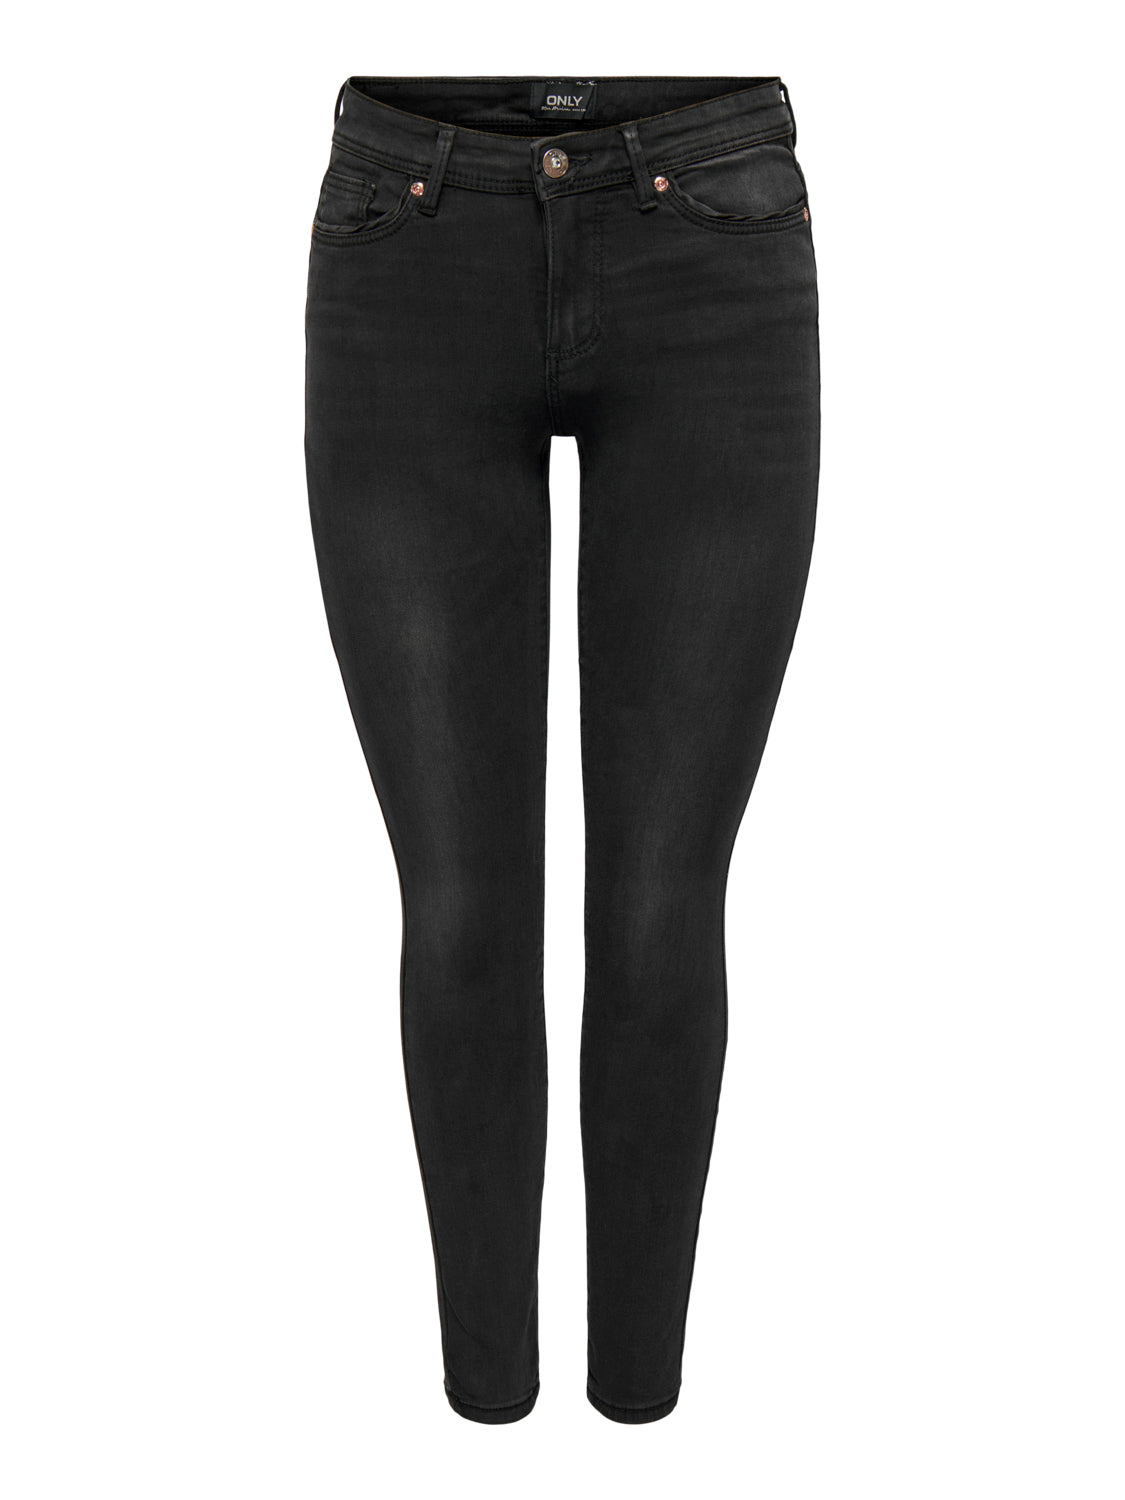 ONLWAUW Jeans - Washed Black